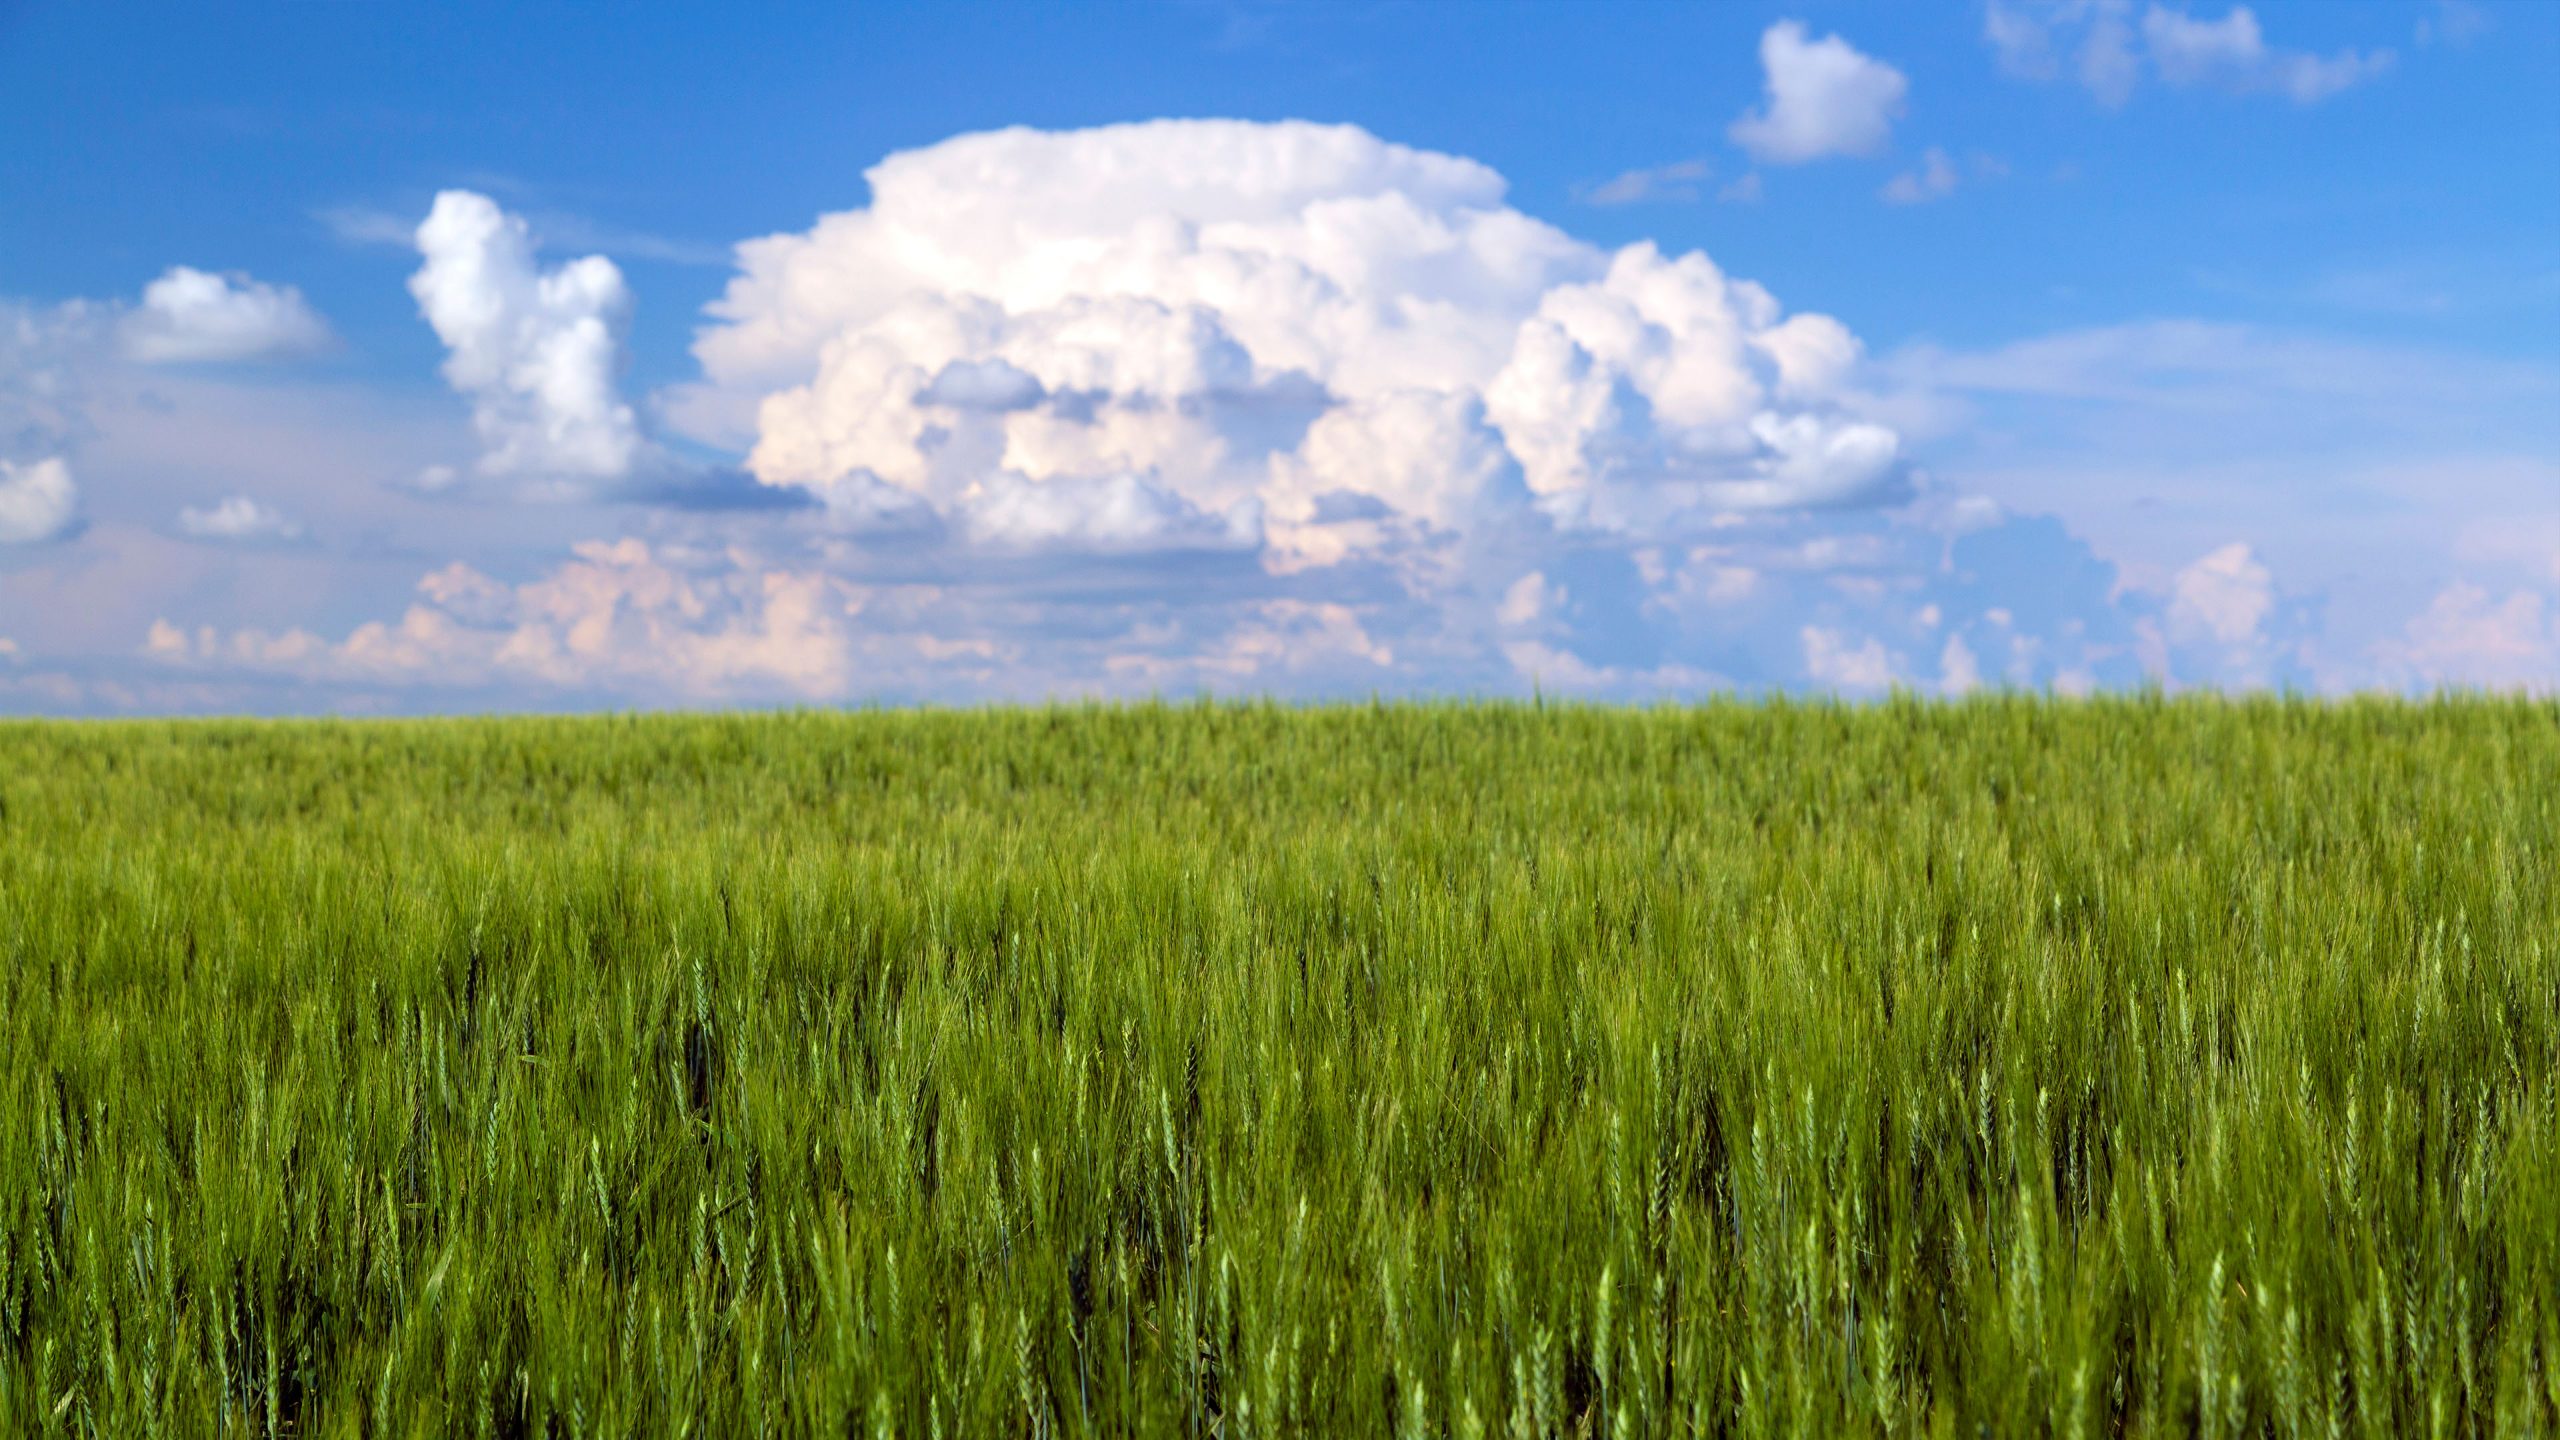 a field of green wheat under a blue sky